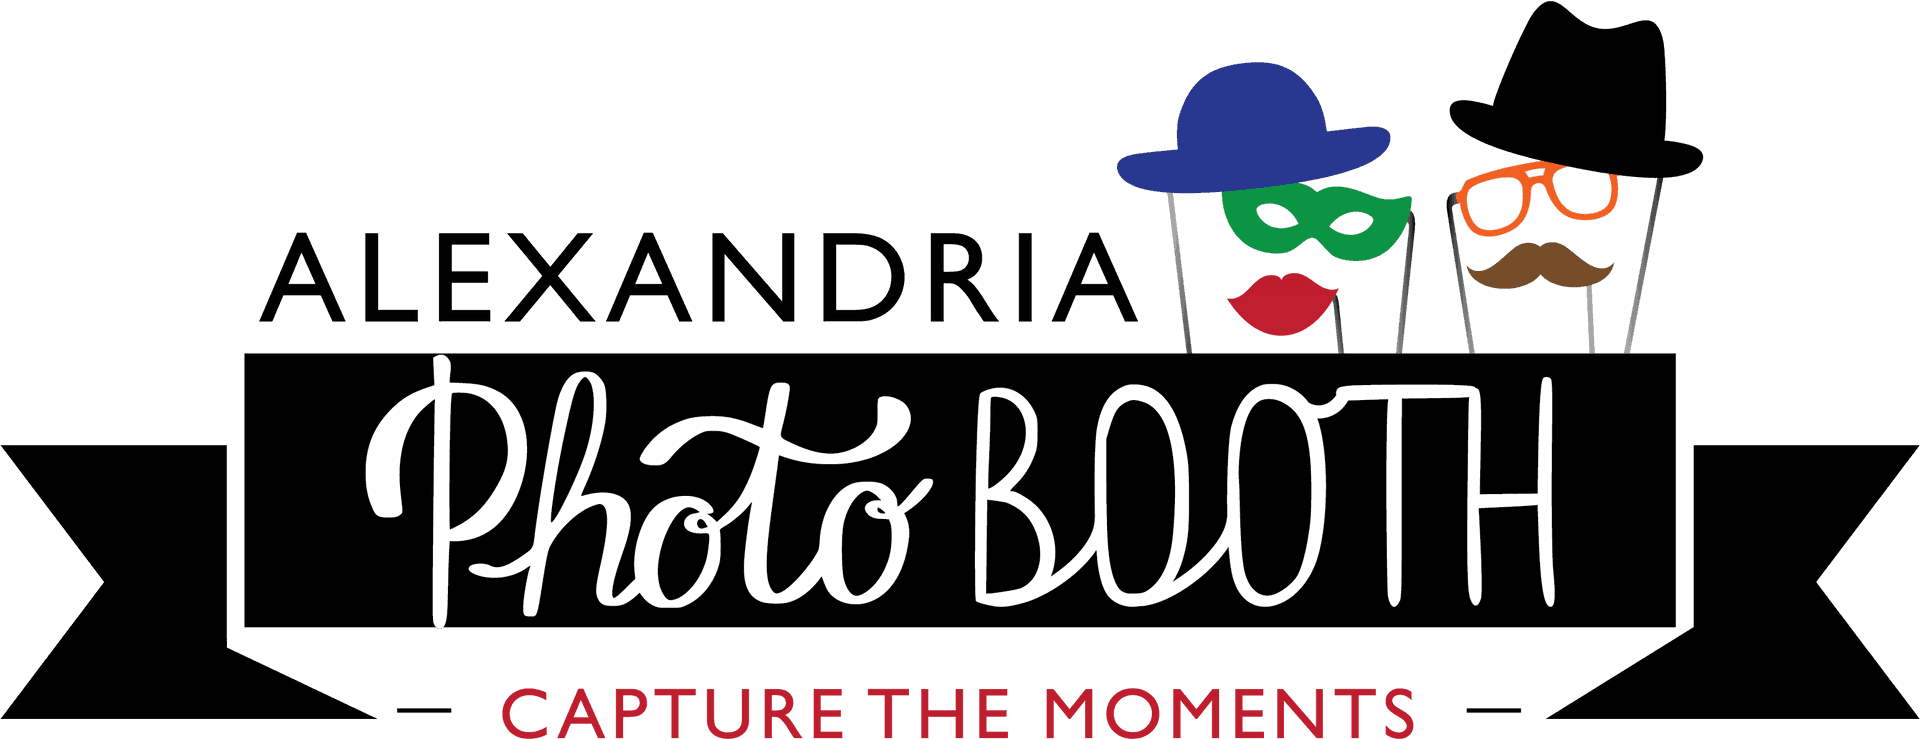 Alexandria Photo Booth Logo PNG